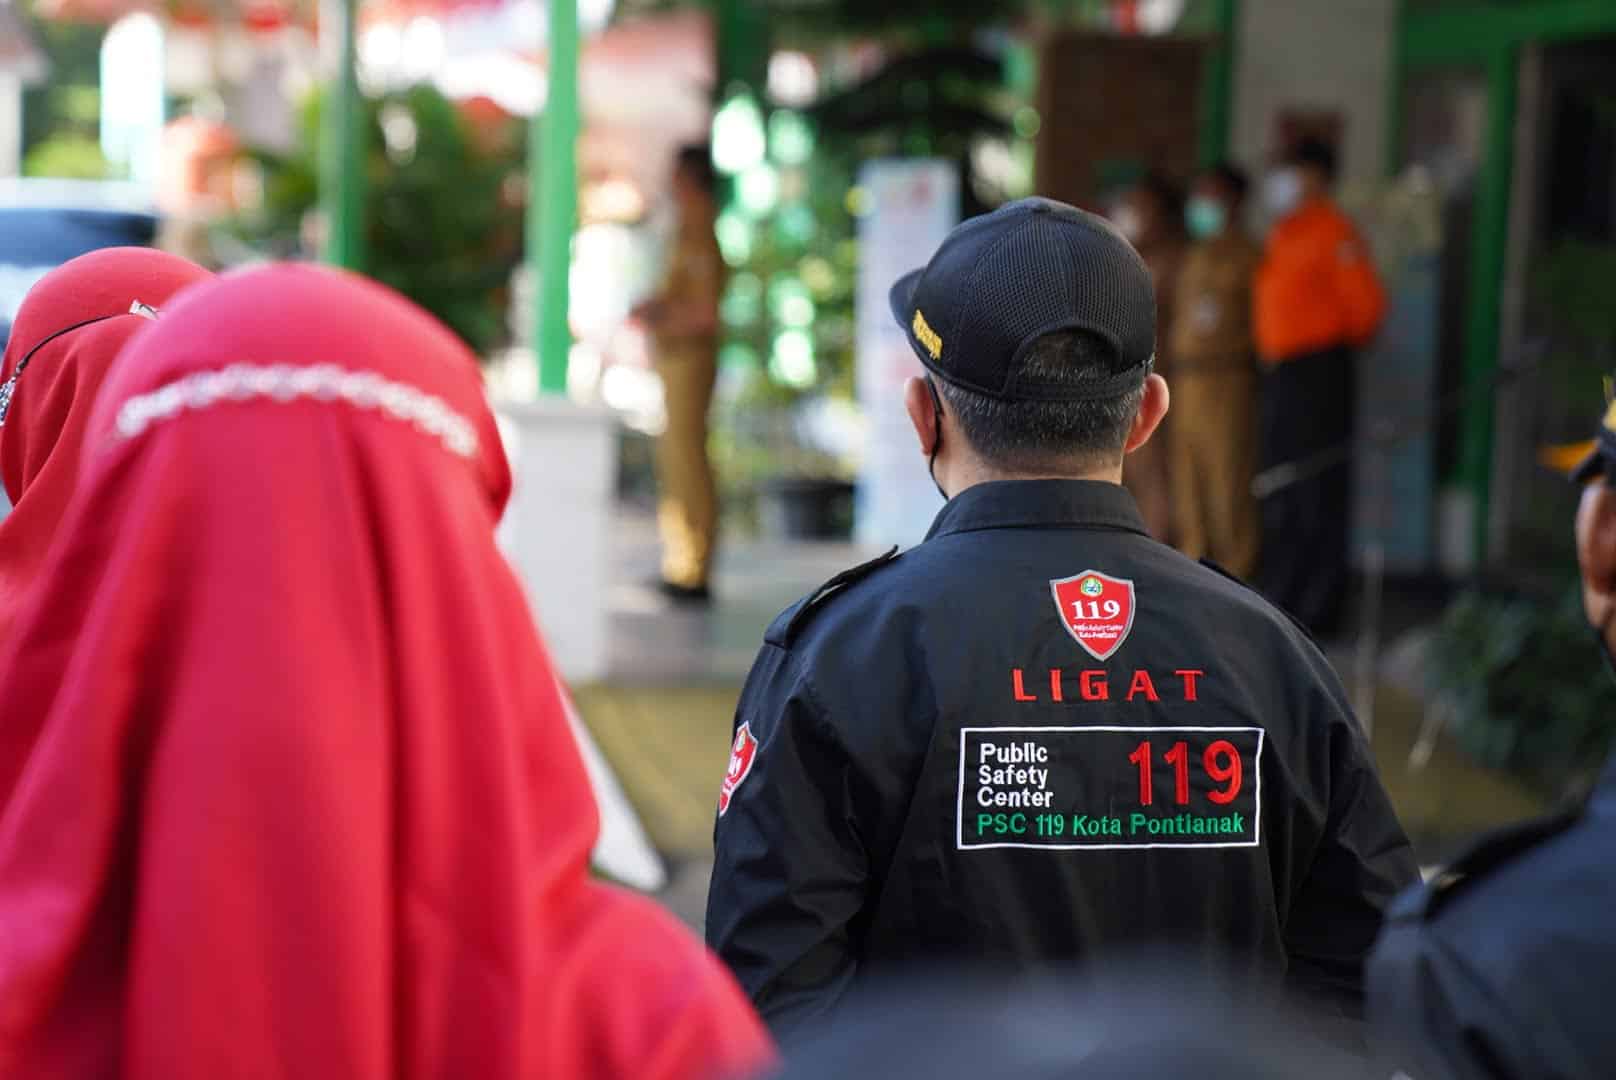 Wali Kota Pontianak, Edi Rusdi Kamtono memberikan sambutan di hadapan para petugas dan relawan Ligat PSC 119. (Prokopim For KalbarOnline.com)